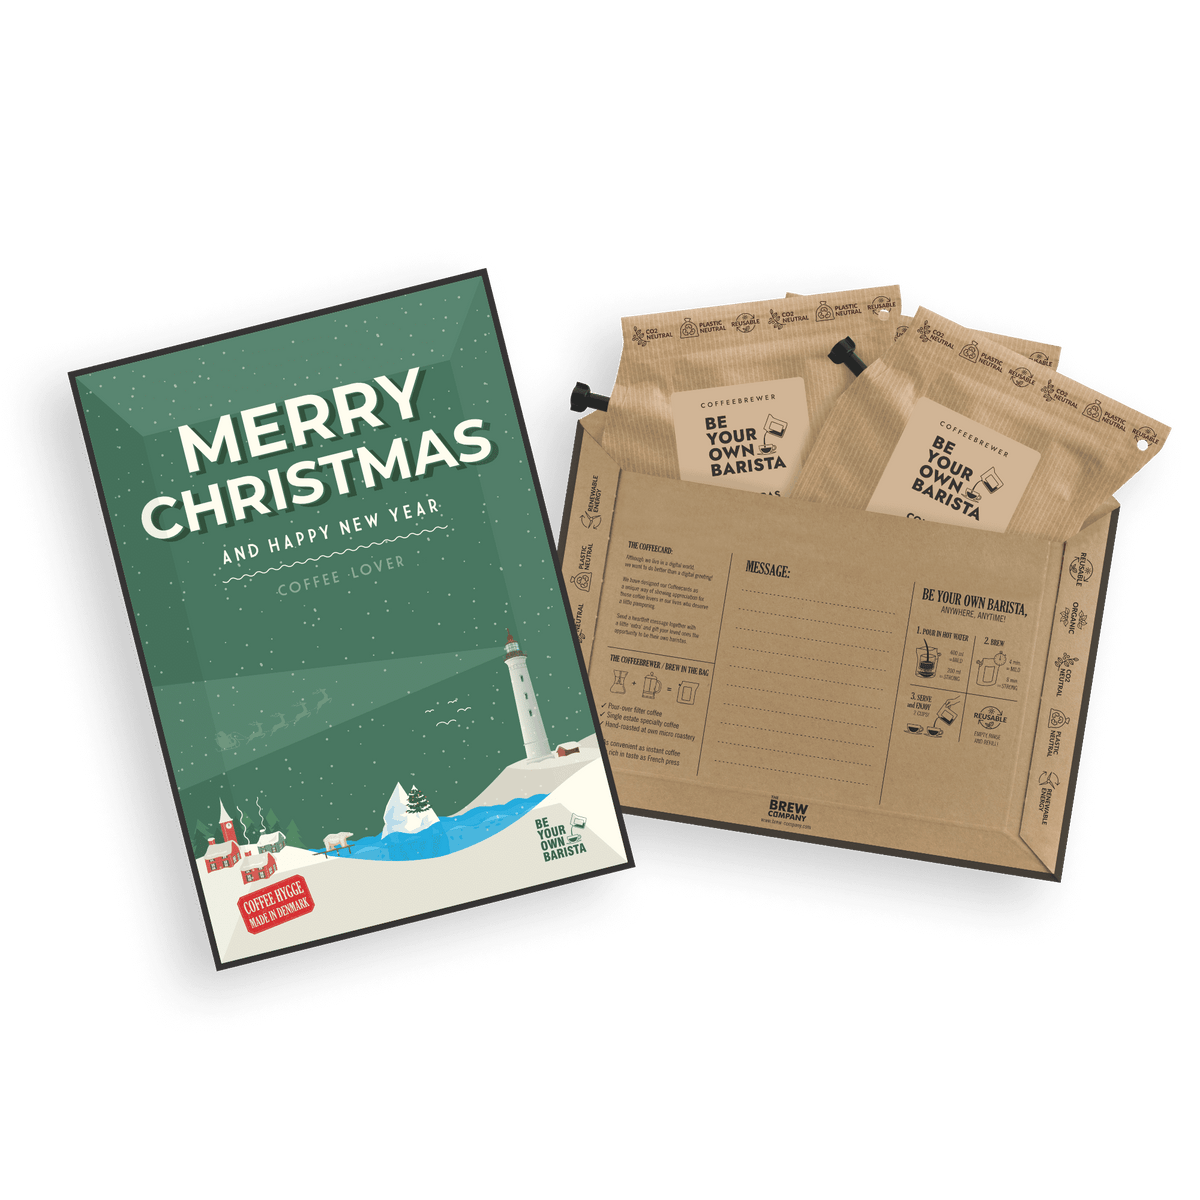 MERRY CHRISTMAS COFFEE OG TEA CARDS Coffee and tea cards The Brew Company